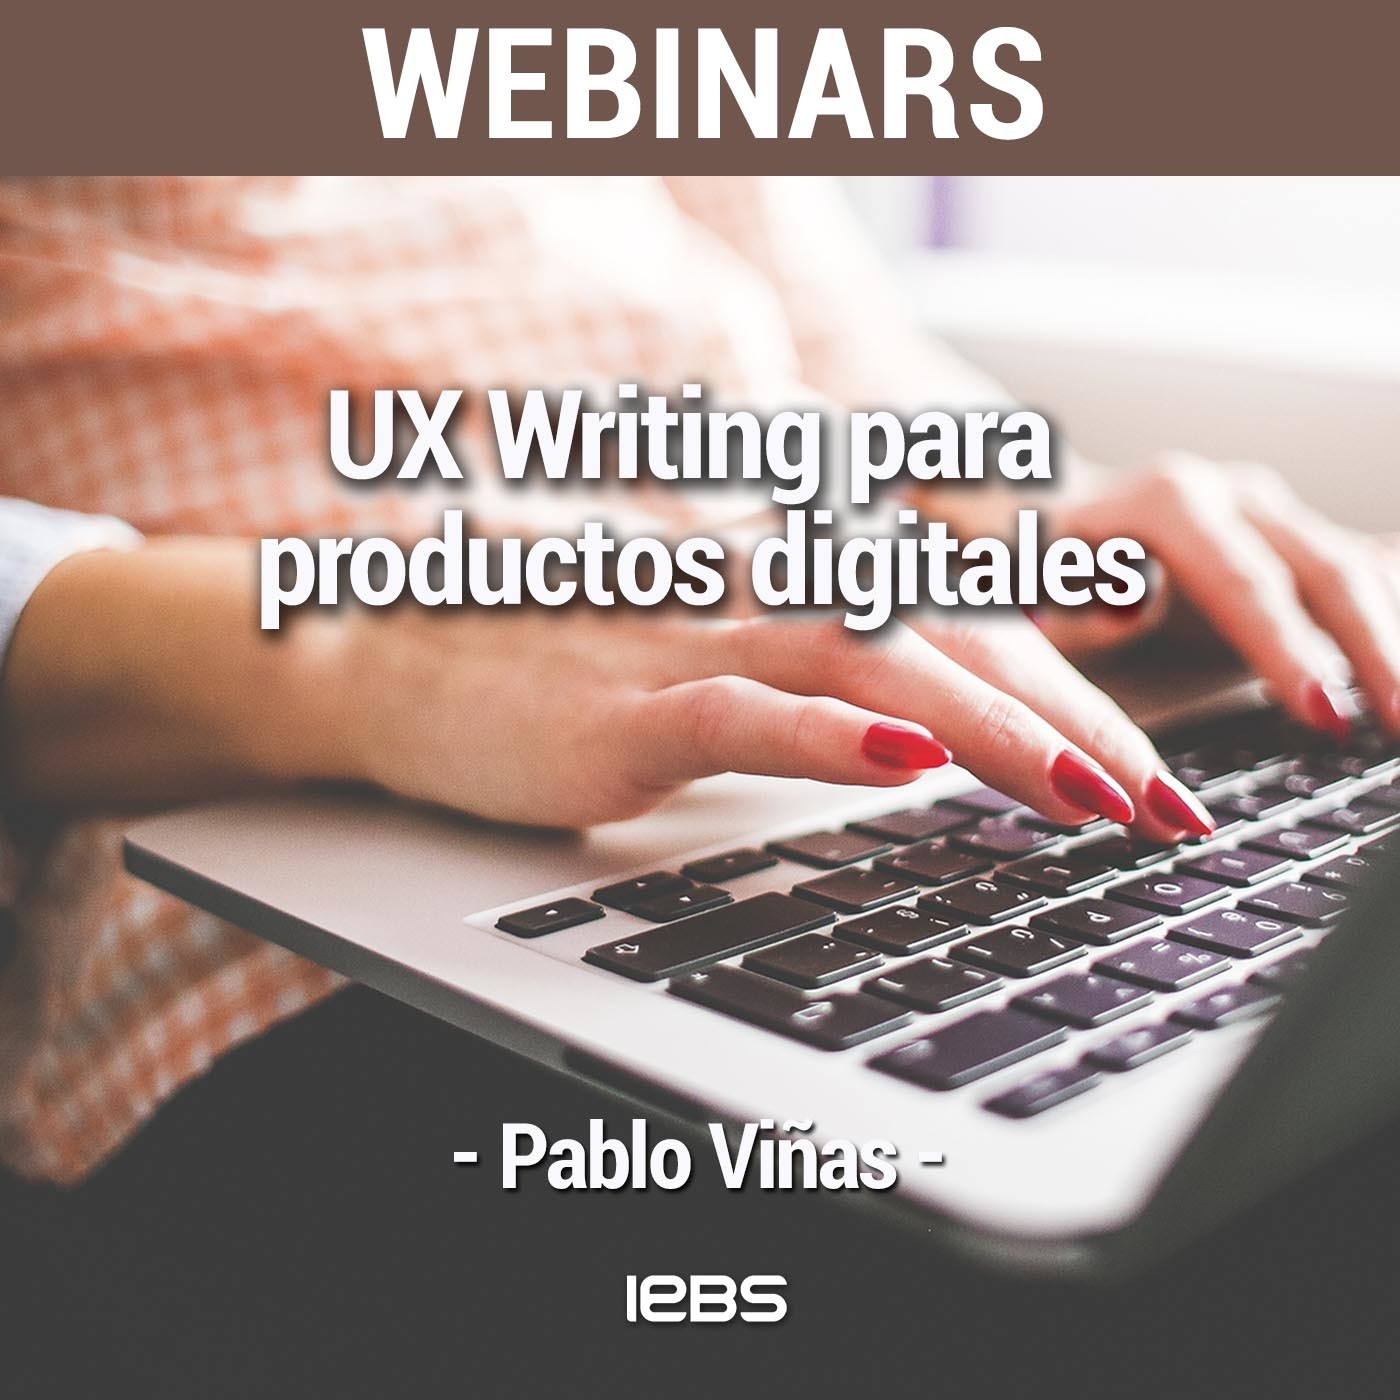 Webinar "UX Writing para productos digitales" de Akademus from IEBS